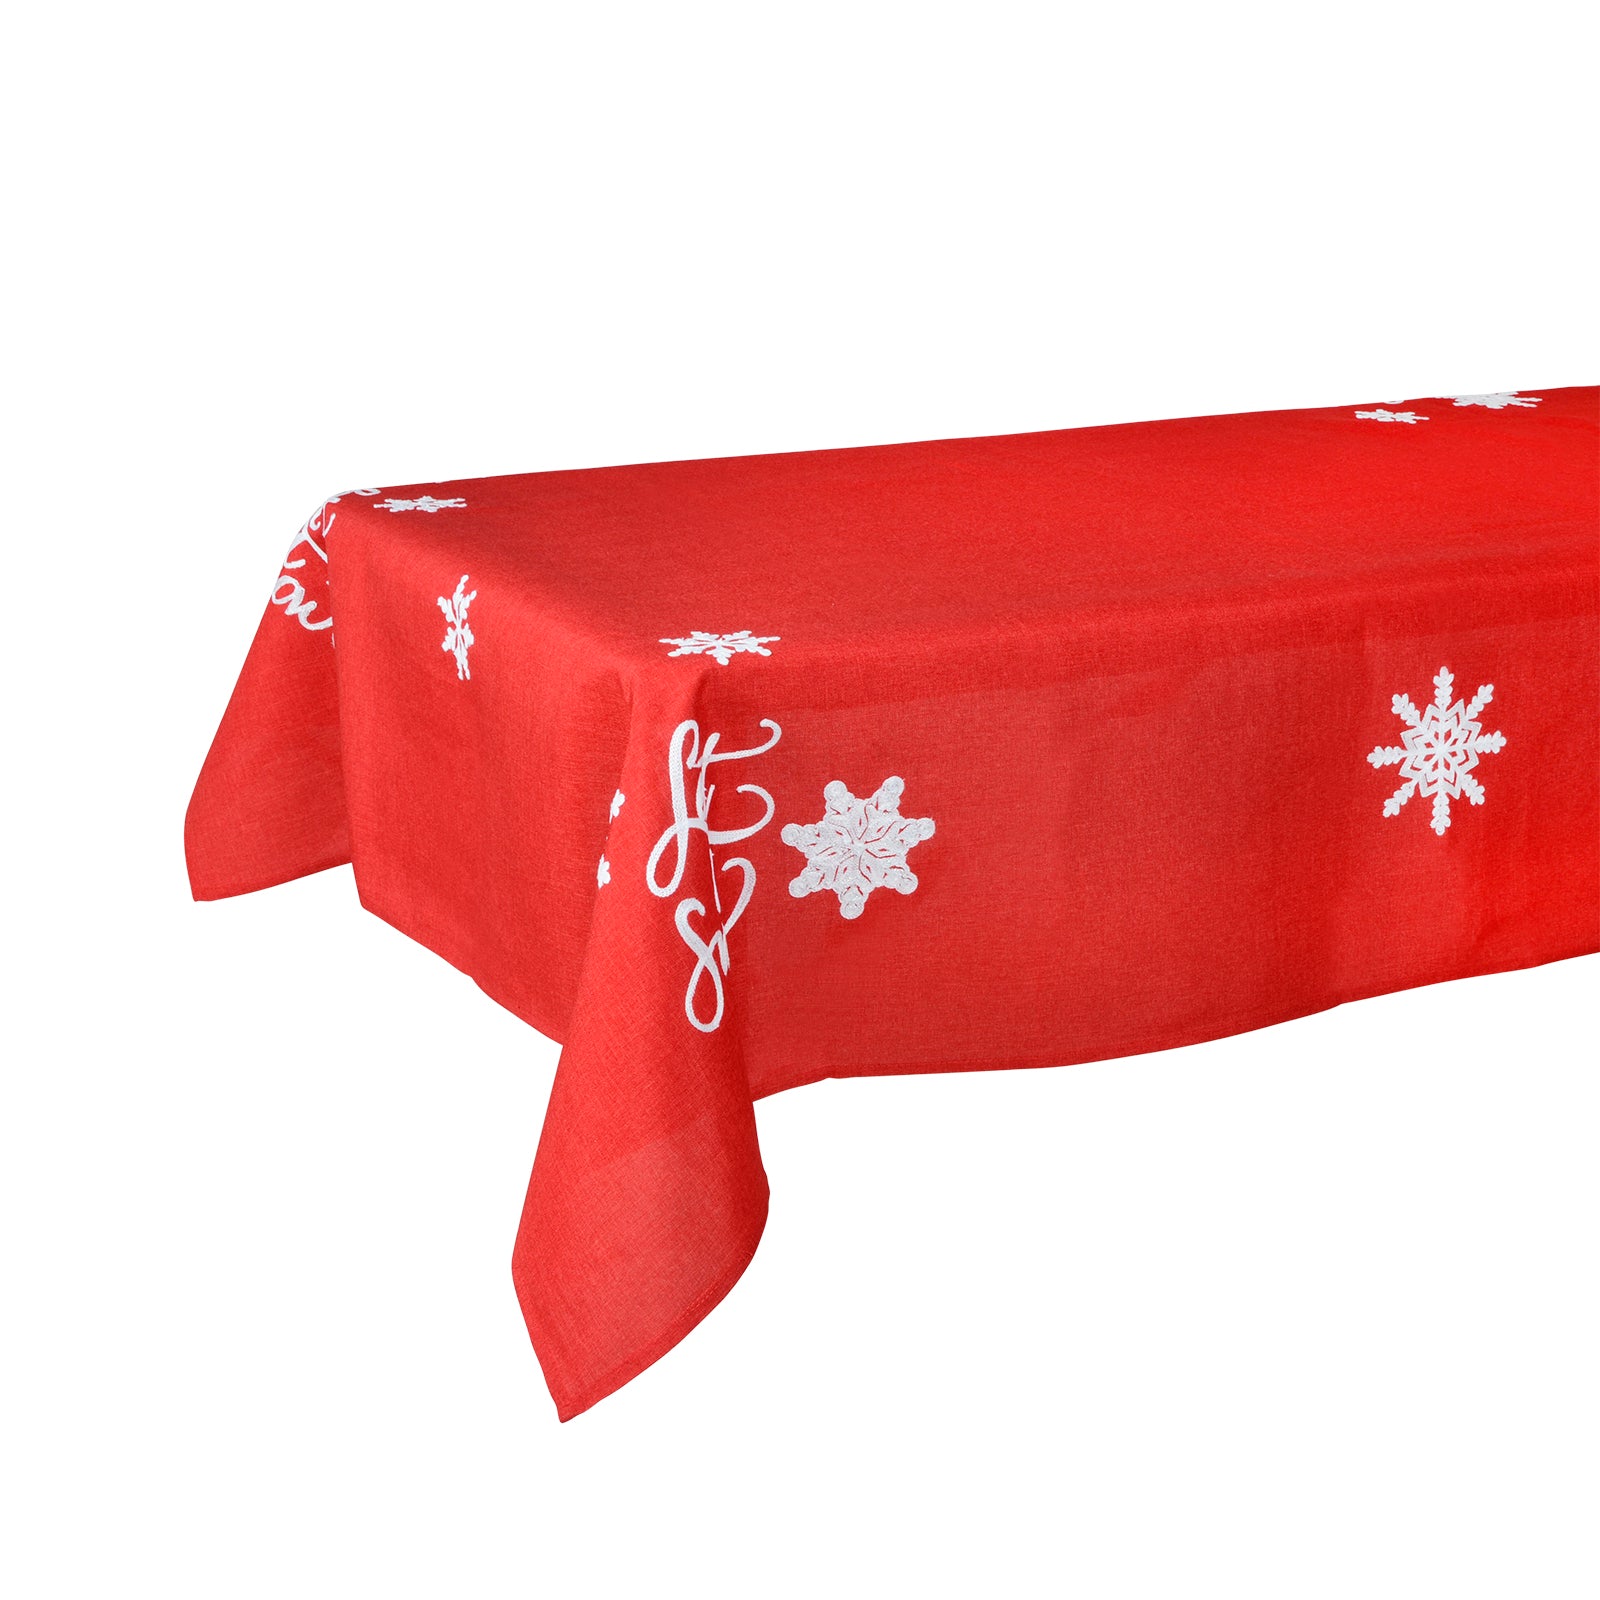 Mr Crimbo Let it Snow Embroidered Tablecloth/Napkin - MrCrimbo.co.uk -XS5867 - Red -christmas napkins